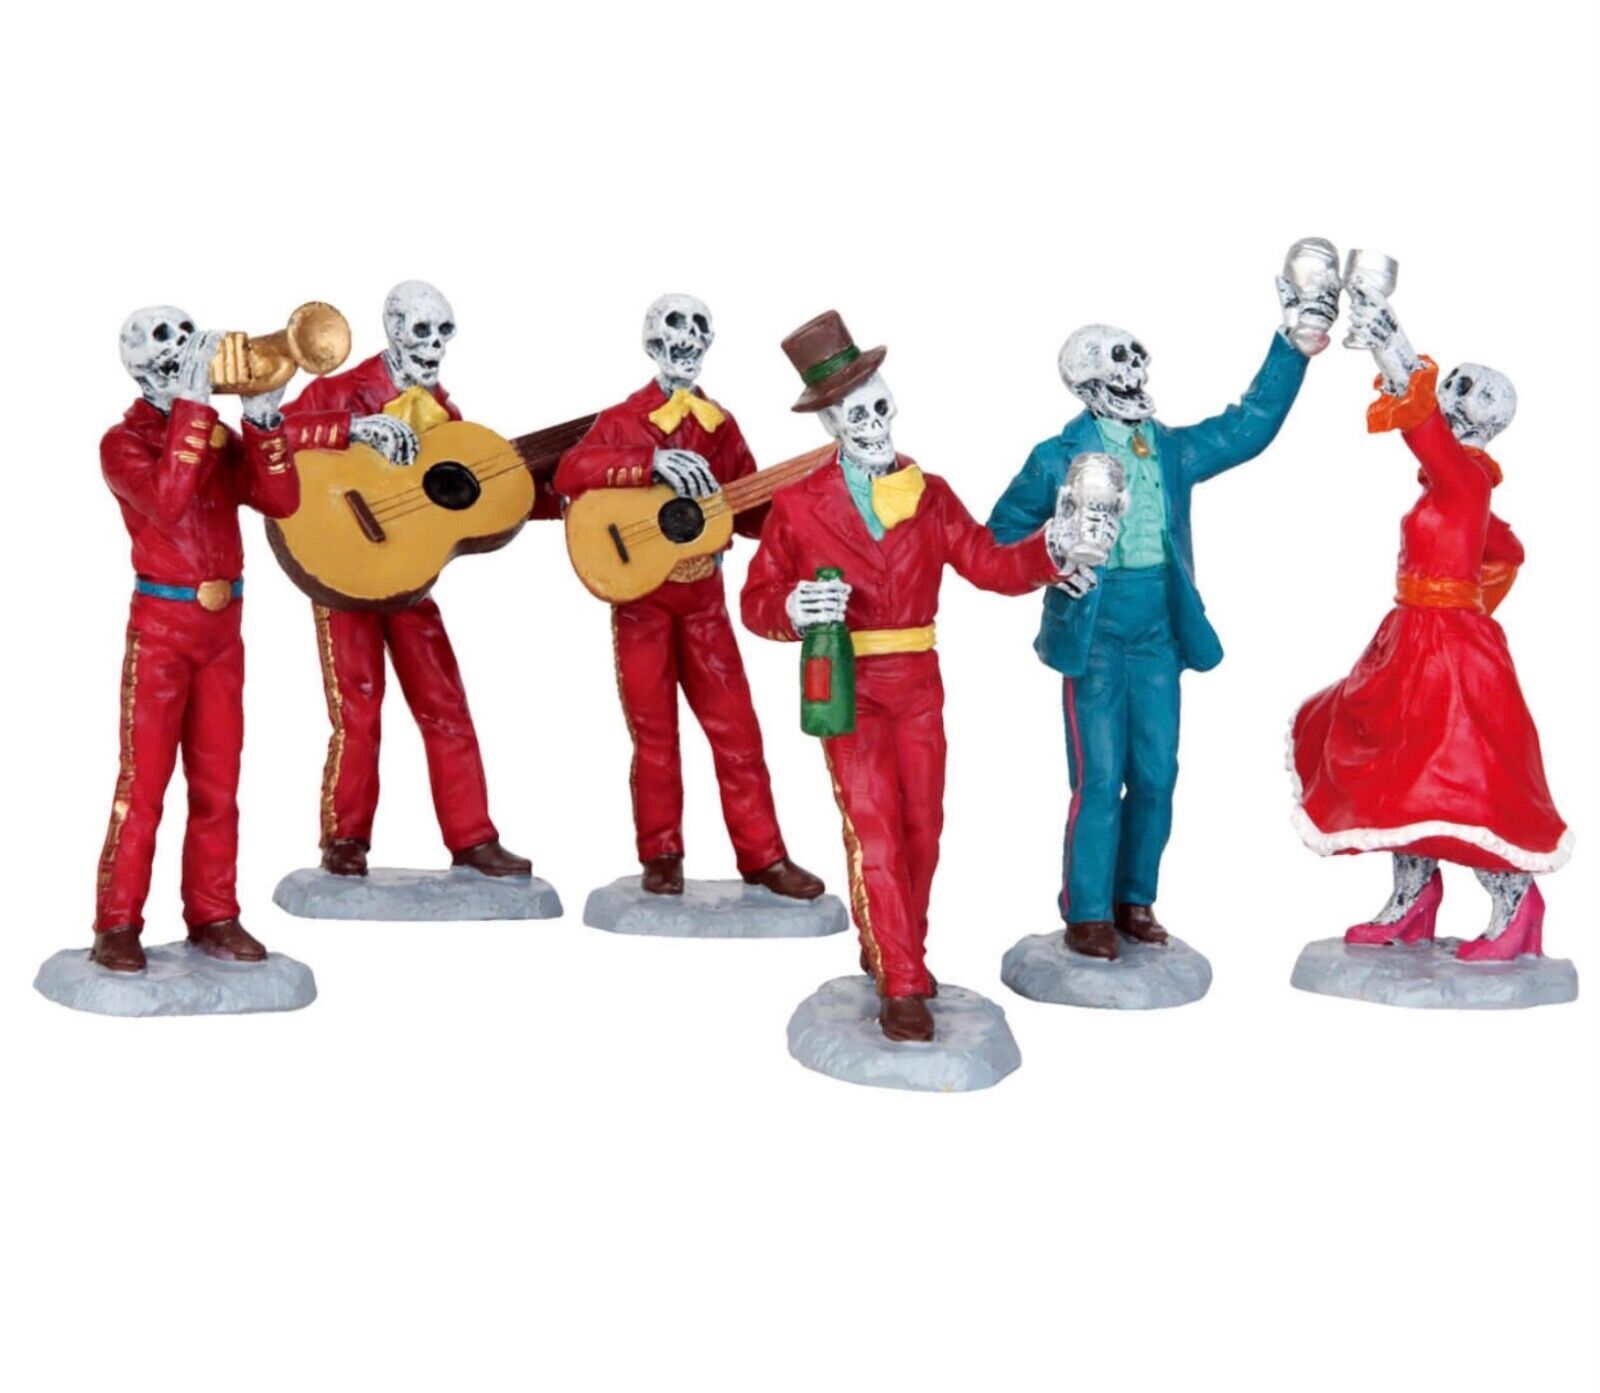 Lemax Spooky Town Fiesta De Los Muertos Set of 6 Figurines # 52309 Brand New